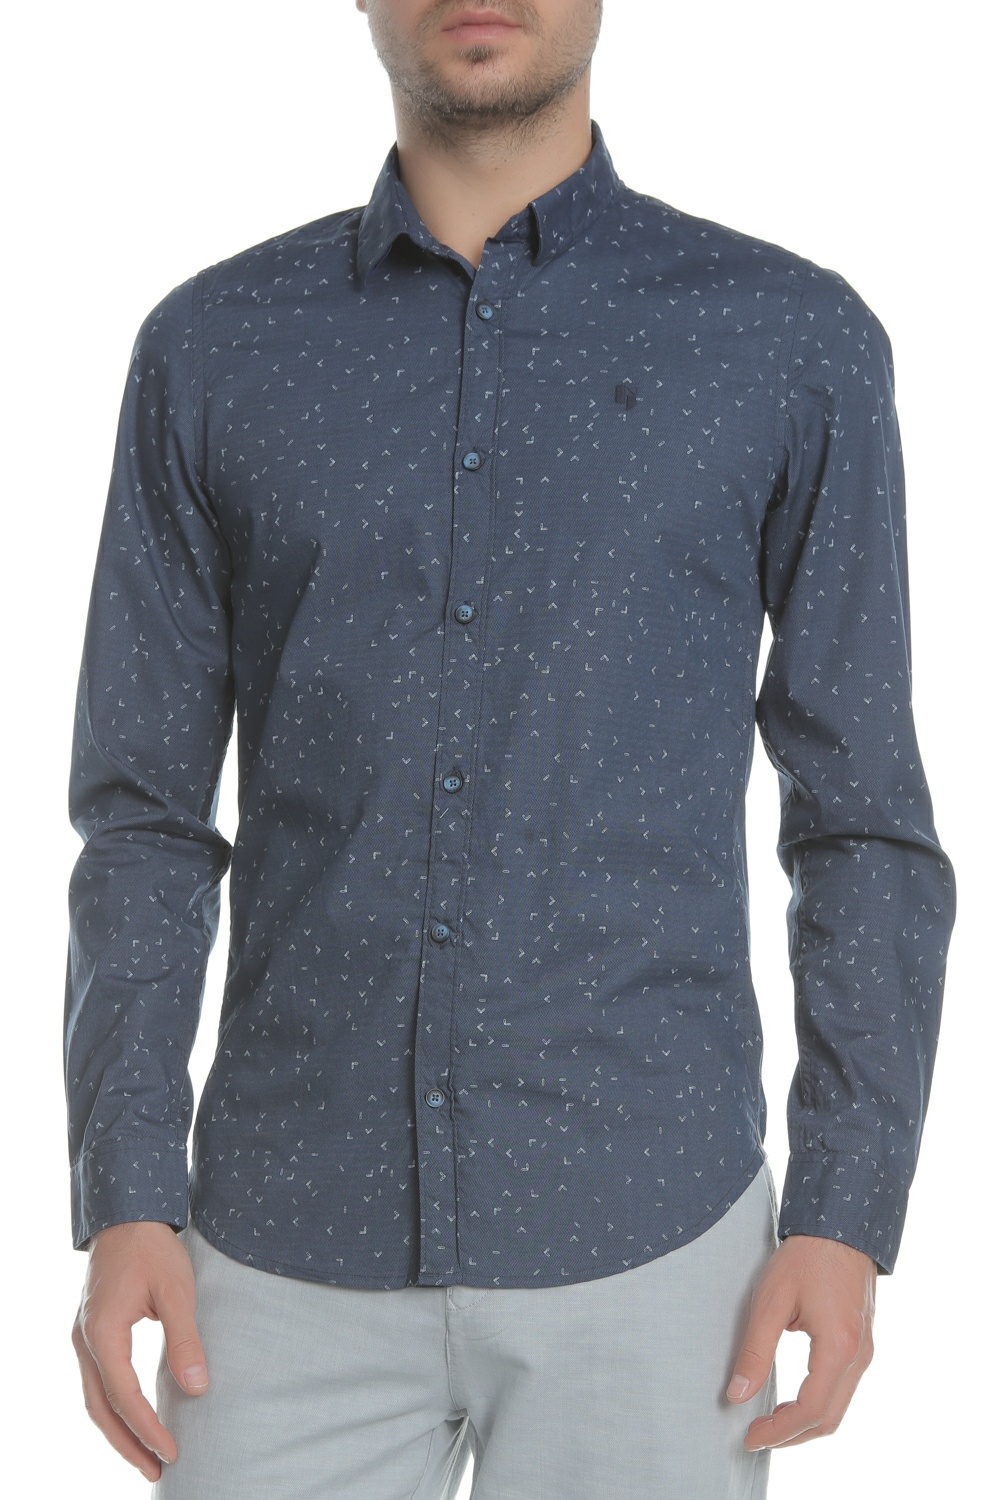 GARCIA JEANS - Ανδρικό μακρυμάνικο πουκάμισο GARCIA JEANS μπλε με print